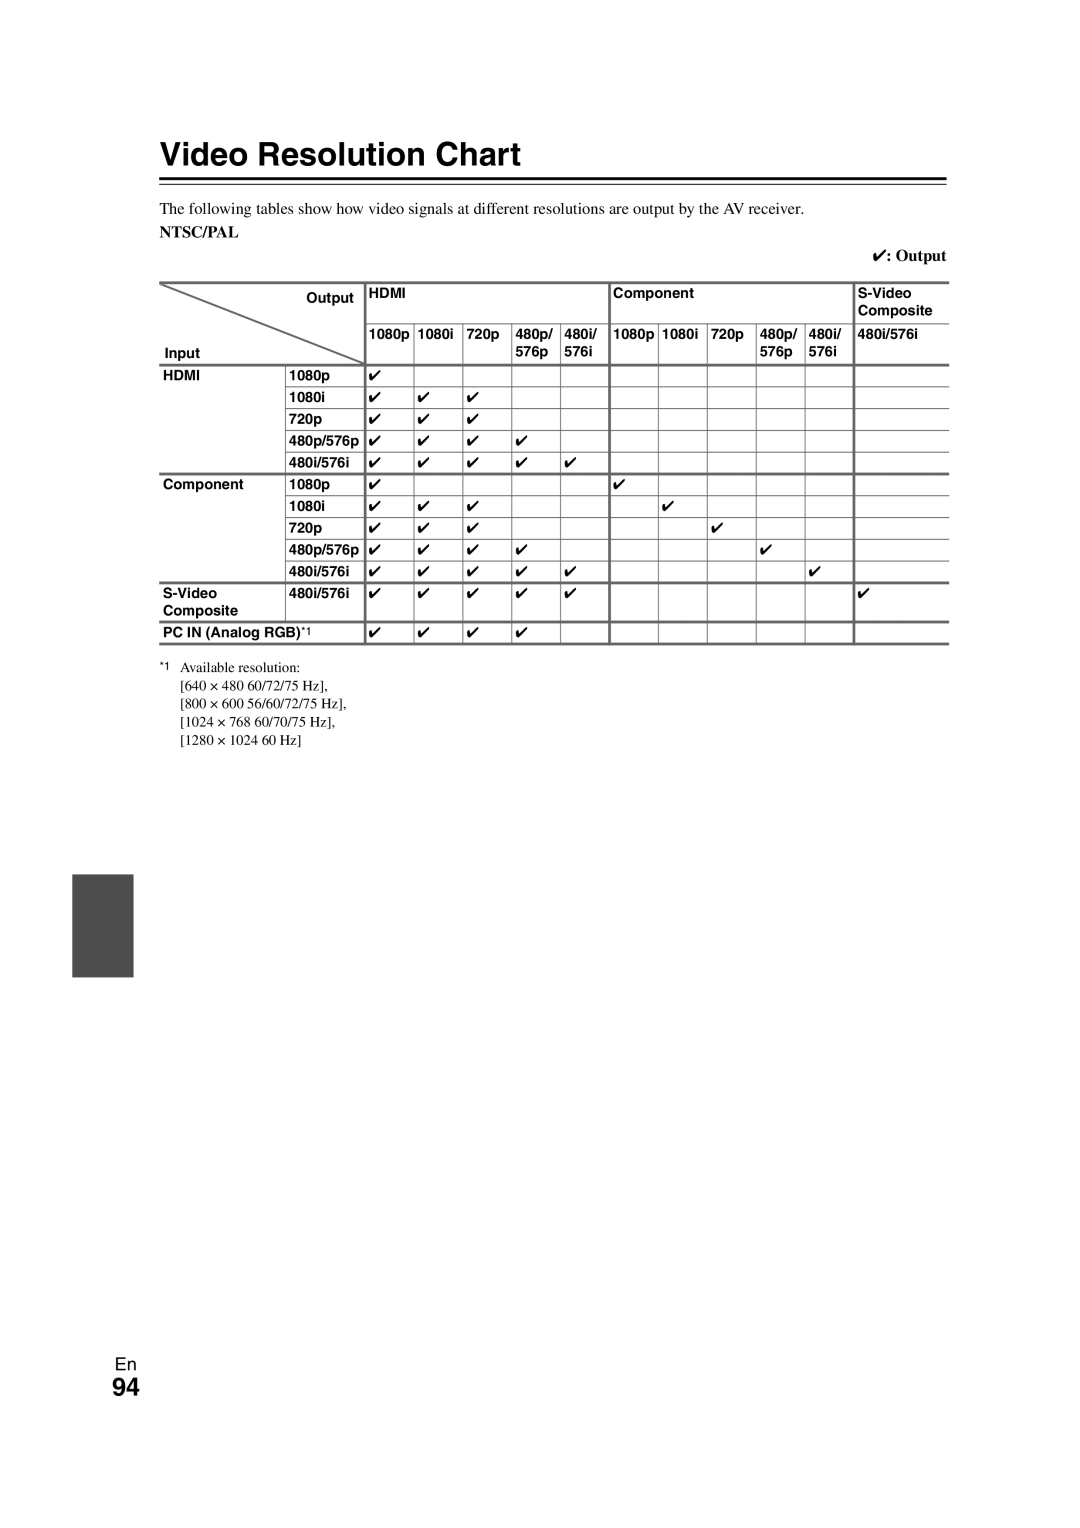 Onkyo TX-NR708 instruction manual Video Resolution Chart, Ntsc/Pal, Output 